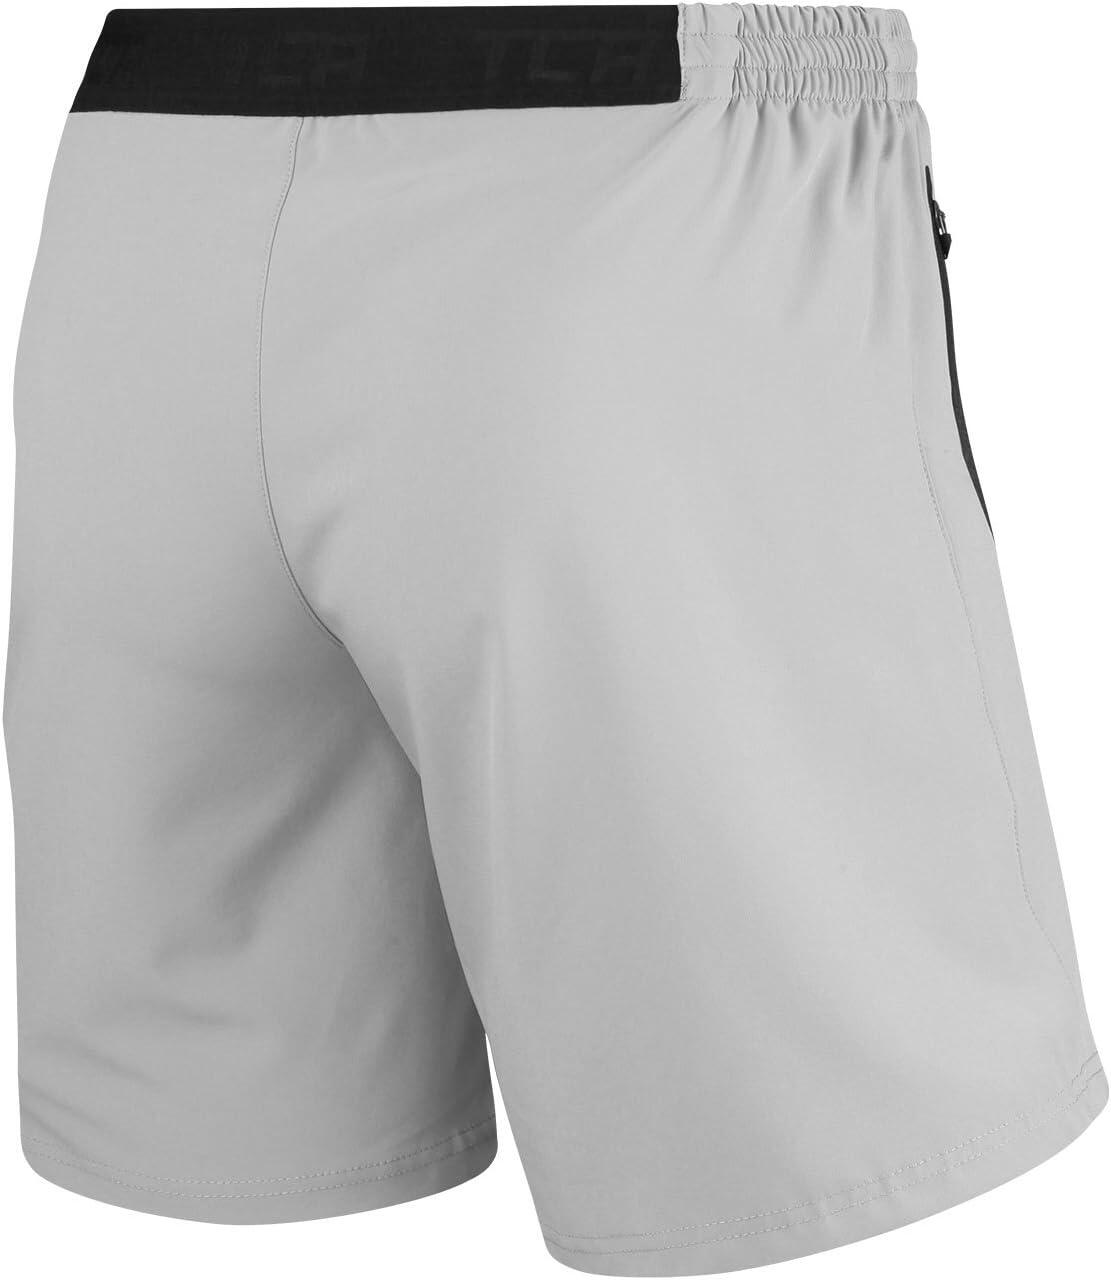 Men's Elite Tech Lightweight Running Shorts with Zip Pockets - Cool Grey/Black 2/6